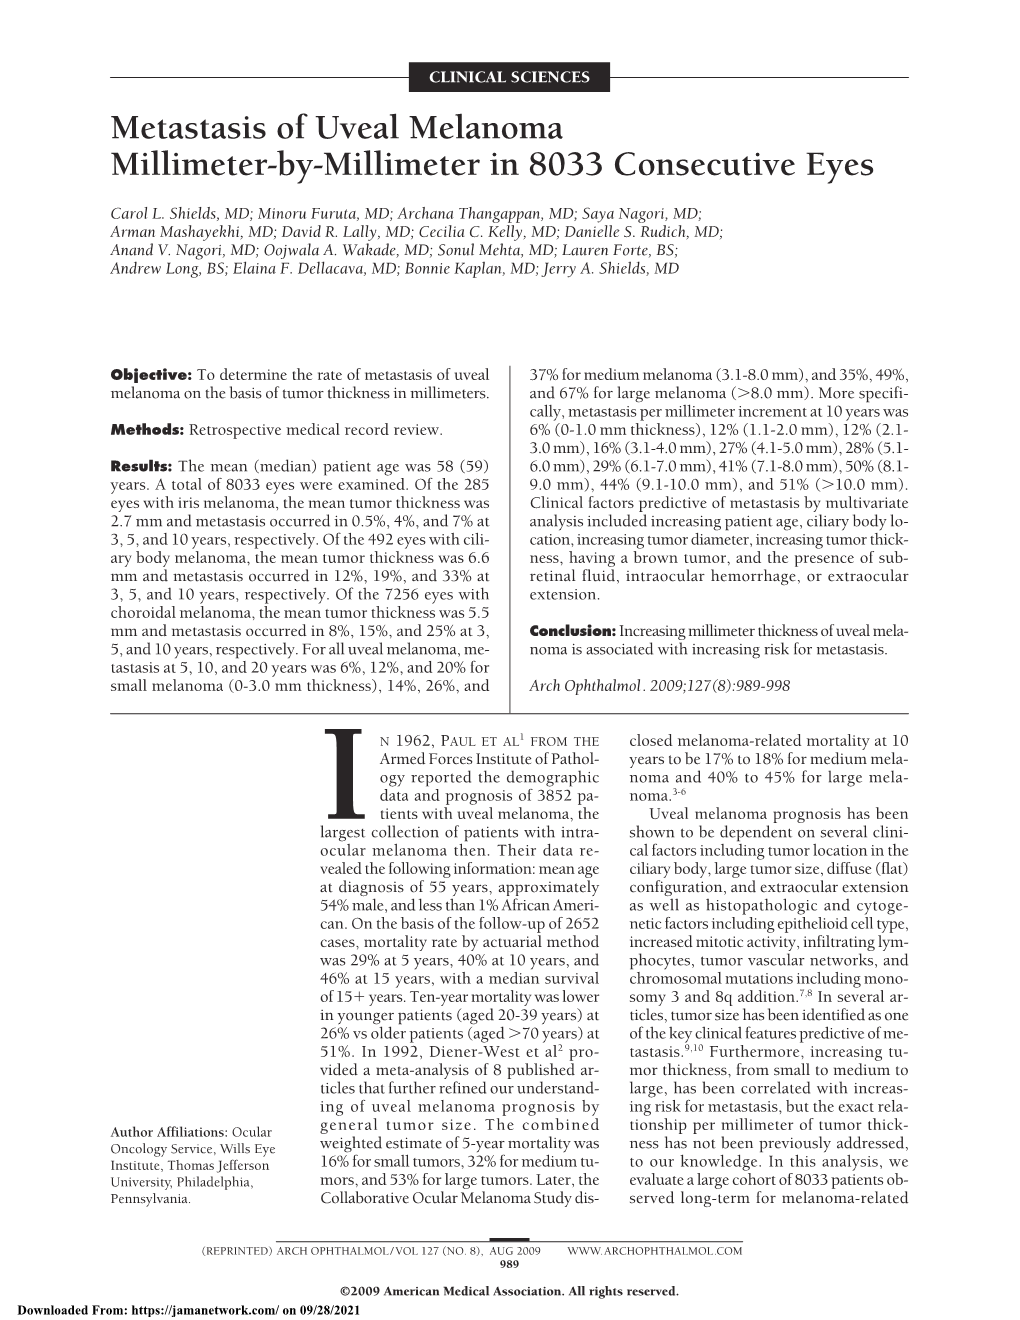 Metastasis of Uveal Melanoma Millimeter-By-Millimeter in 8033 Consecutive Eyes